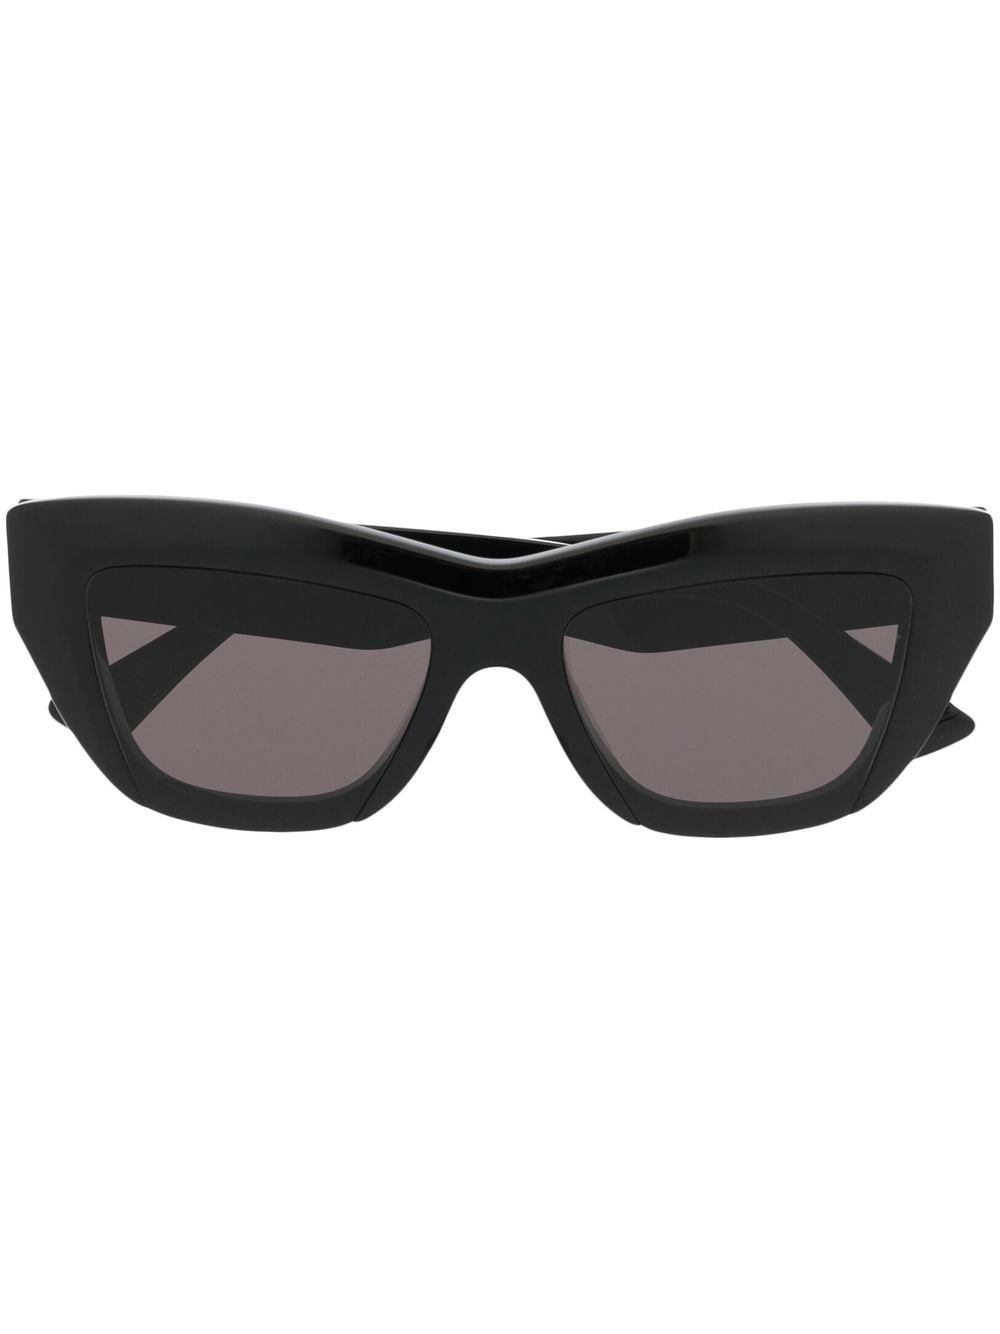 cat-eye sunglasses - 1